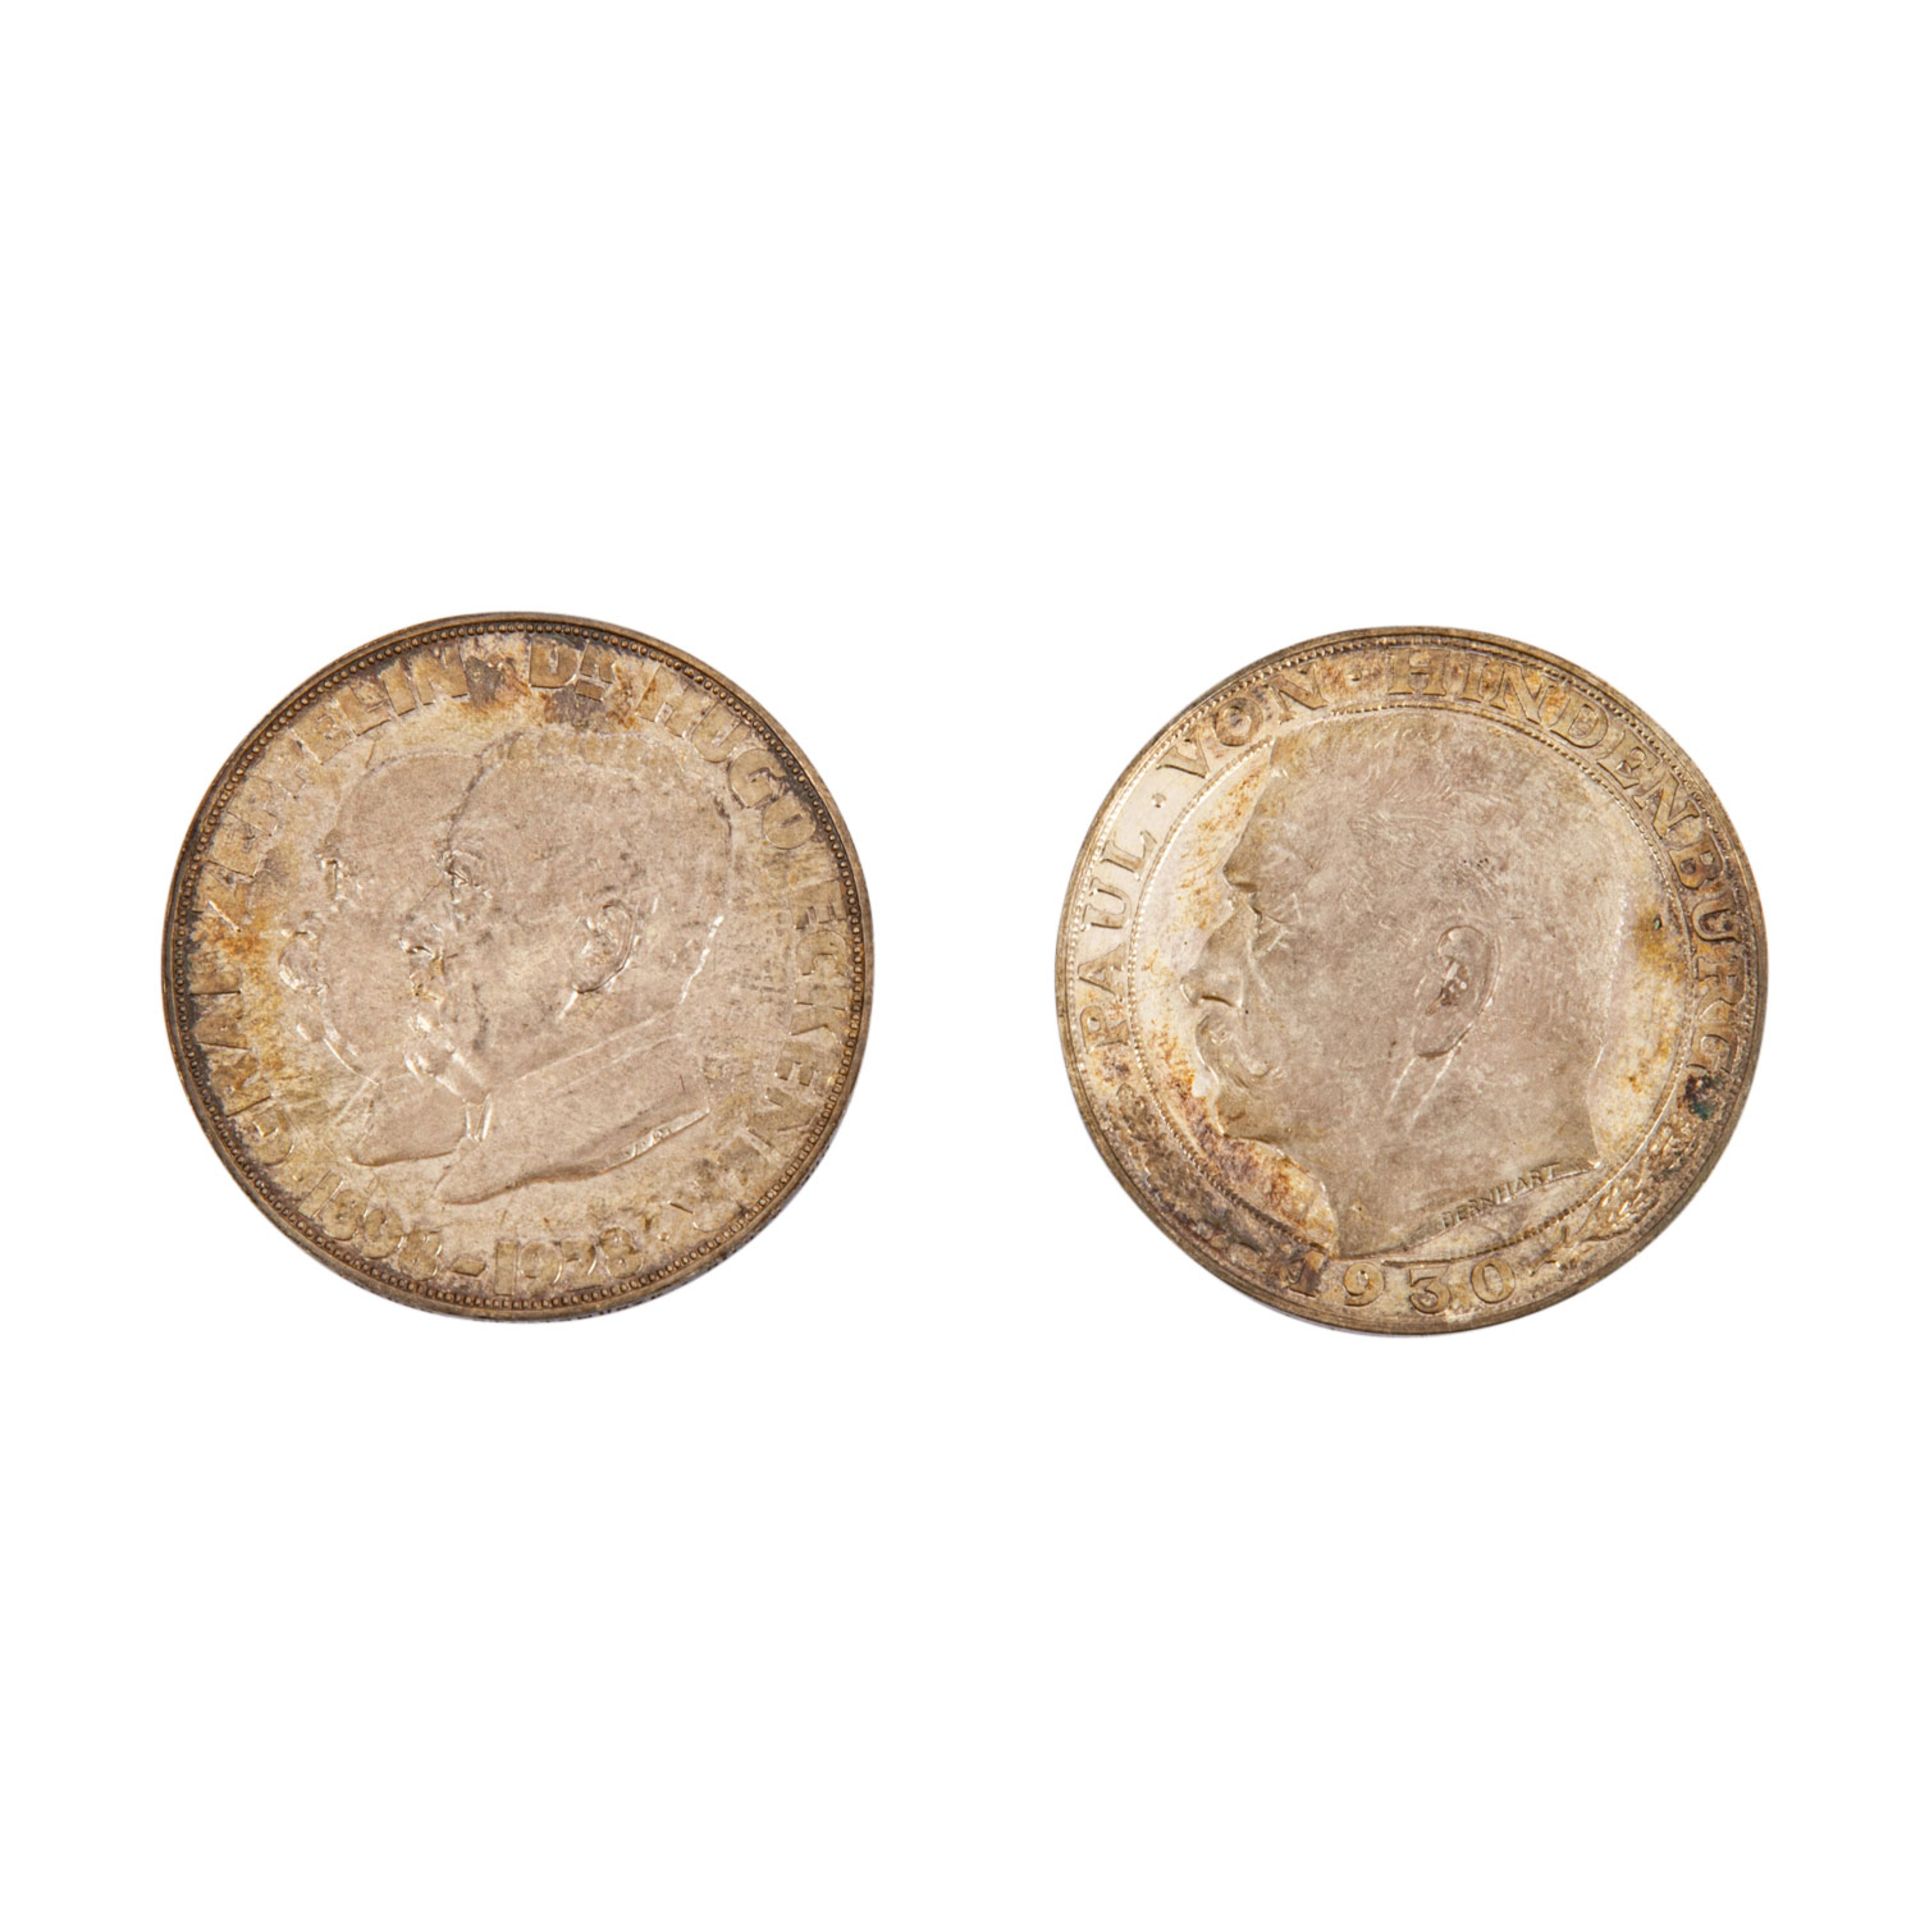 2 Silbermedaillen der Weimarer Republik - 1 x Weimarer Republik - Silbermedaille 1930, von